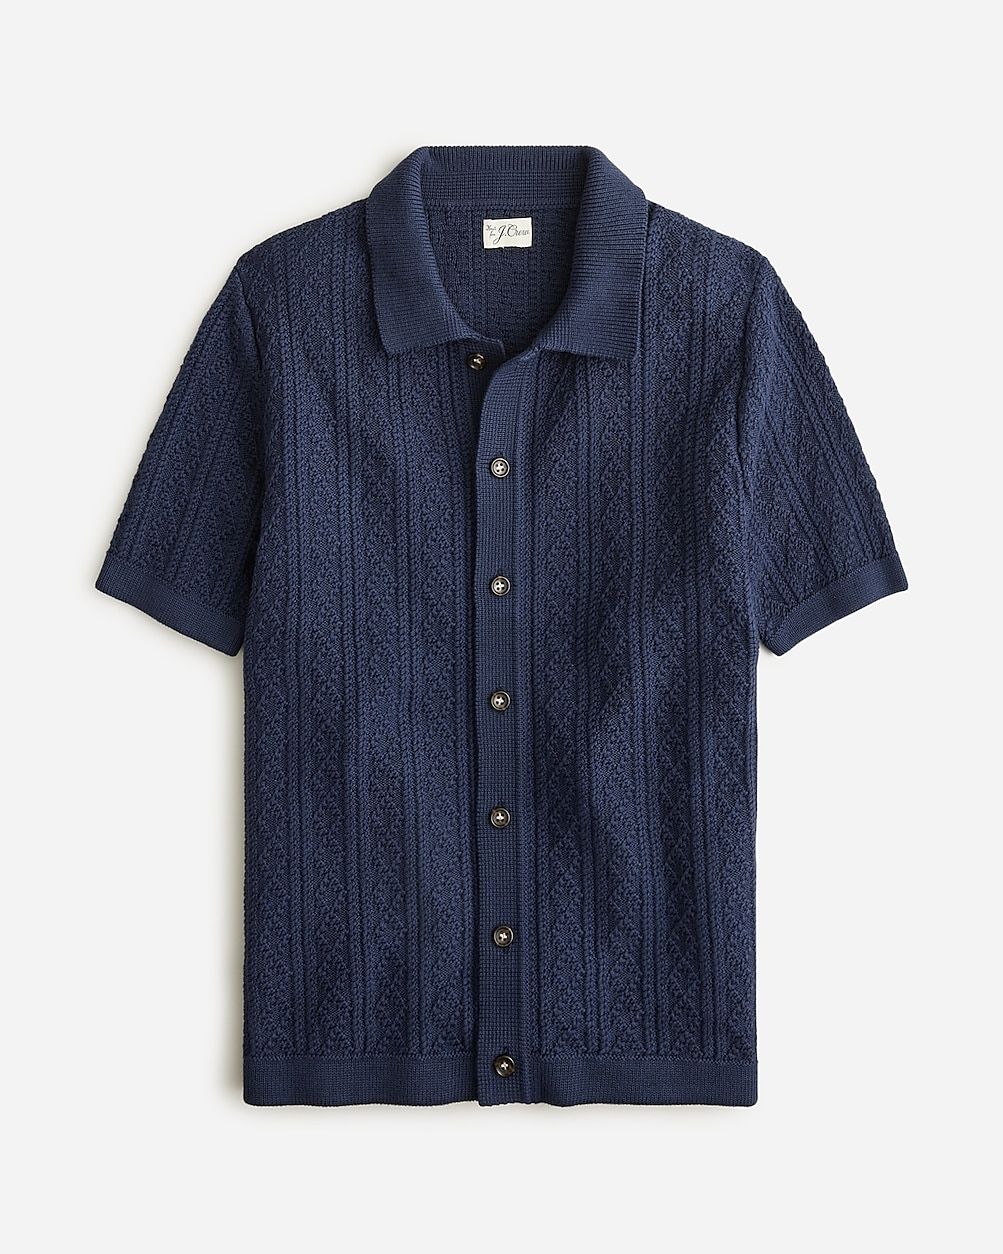 Short-sleeve heritage cotton pointelle-stitch sweater | J.Crew US